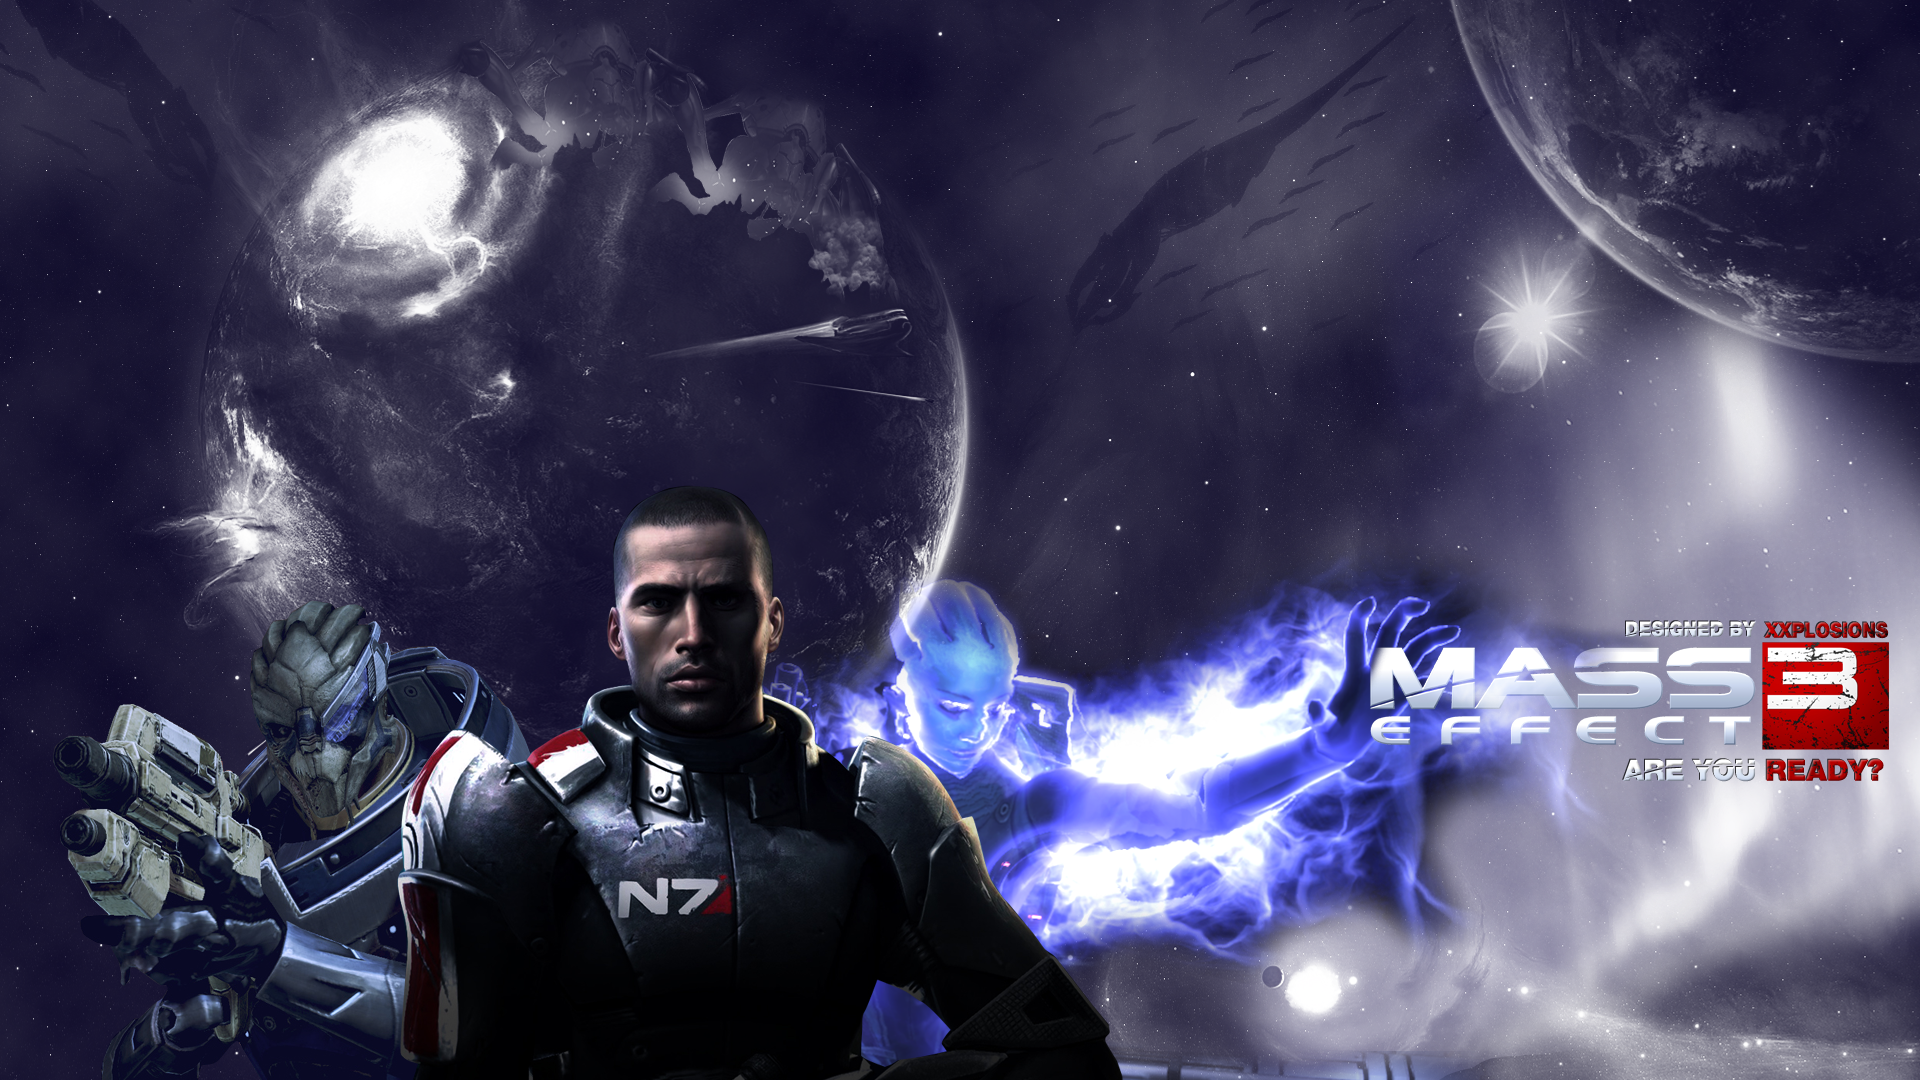 Mass Effect Desktop Background By Xxplosions